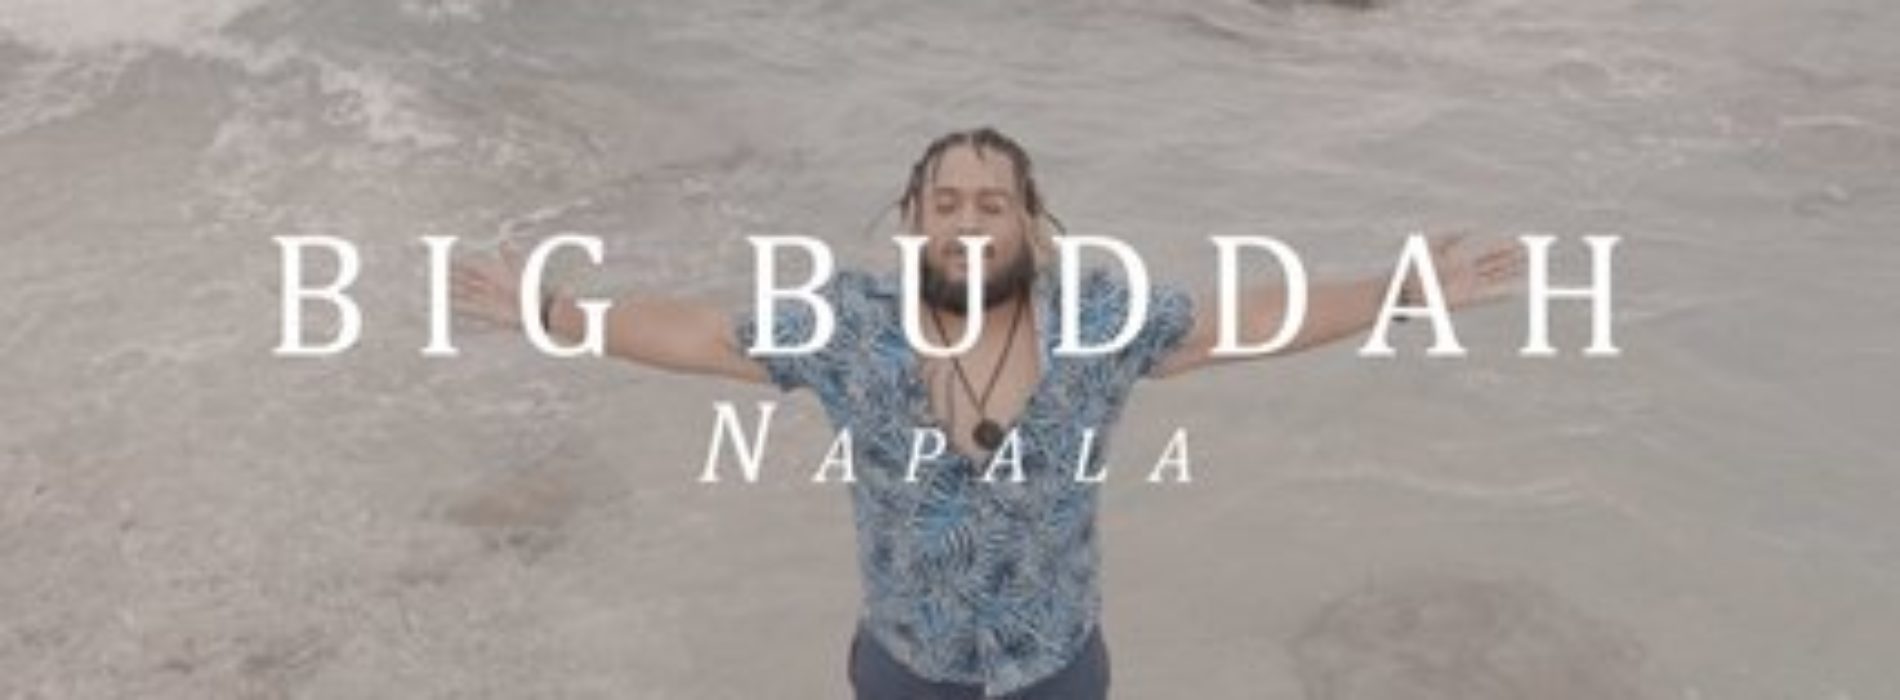 Big Buddah – NaPaLa – Novembre 2020